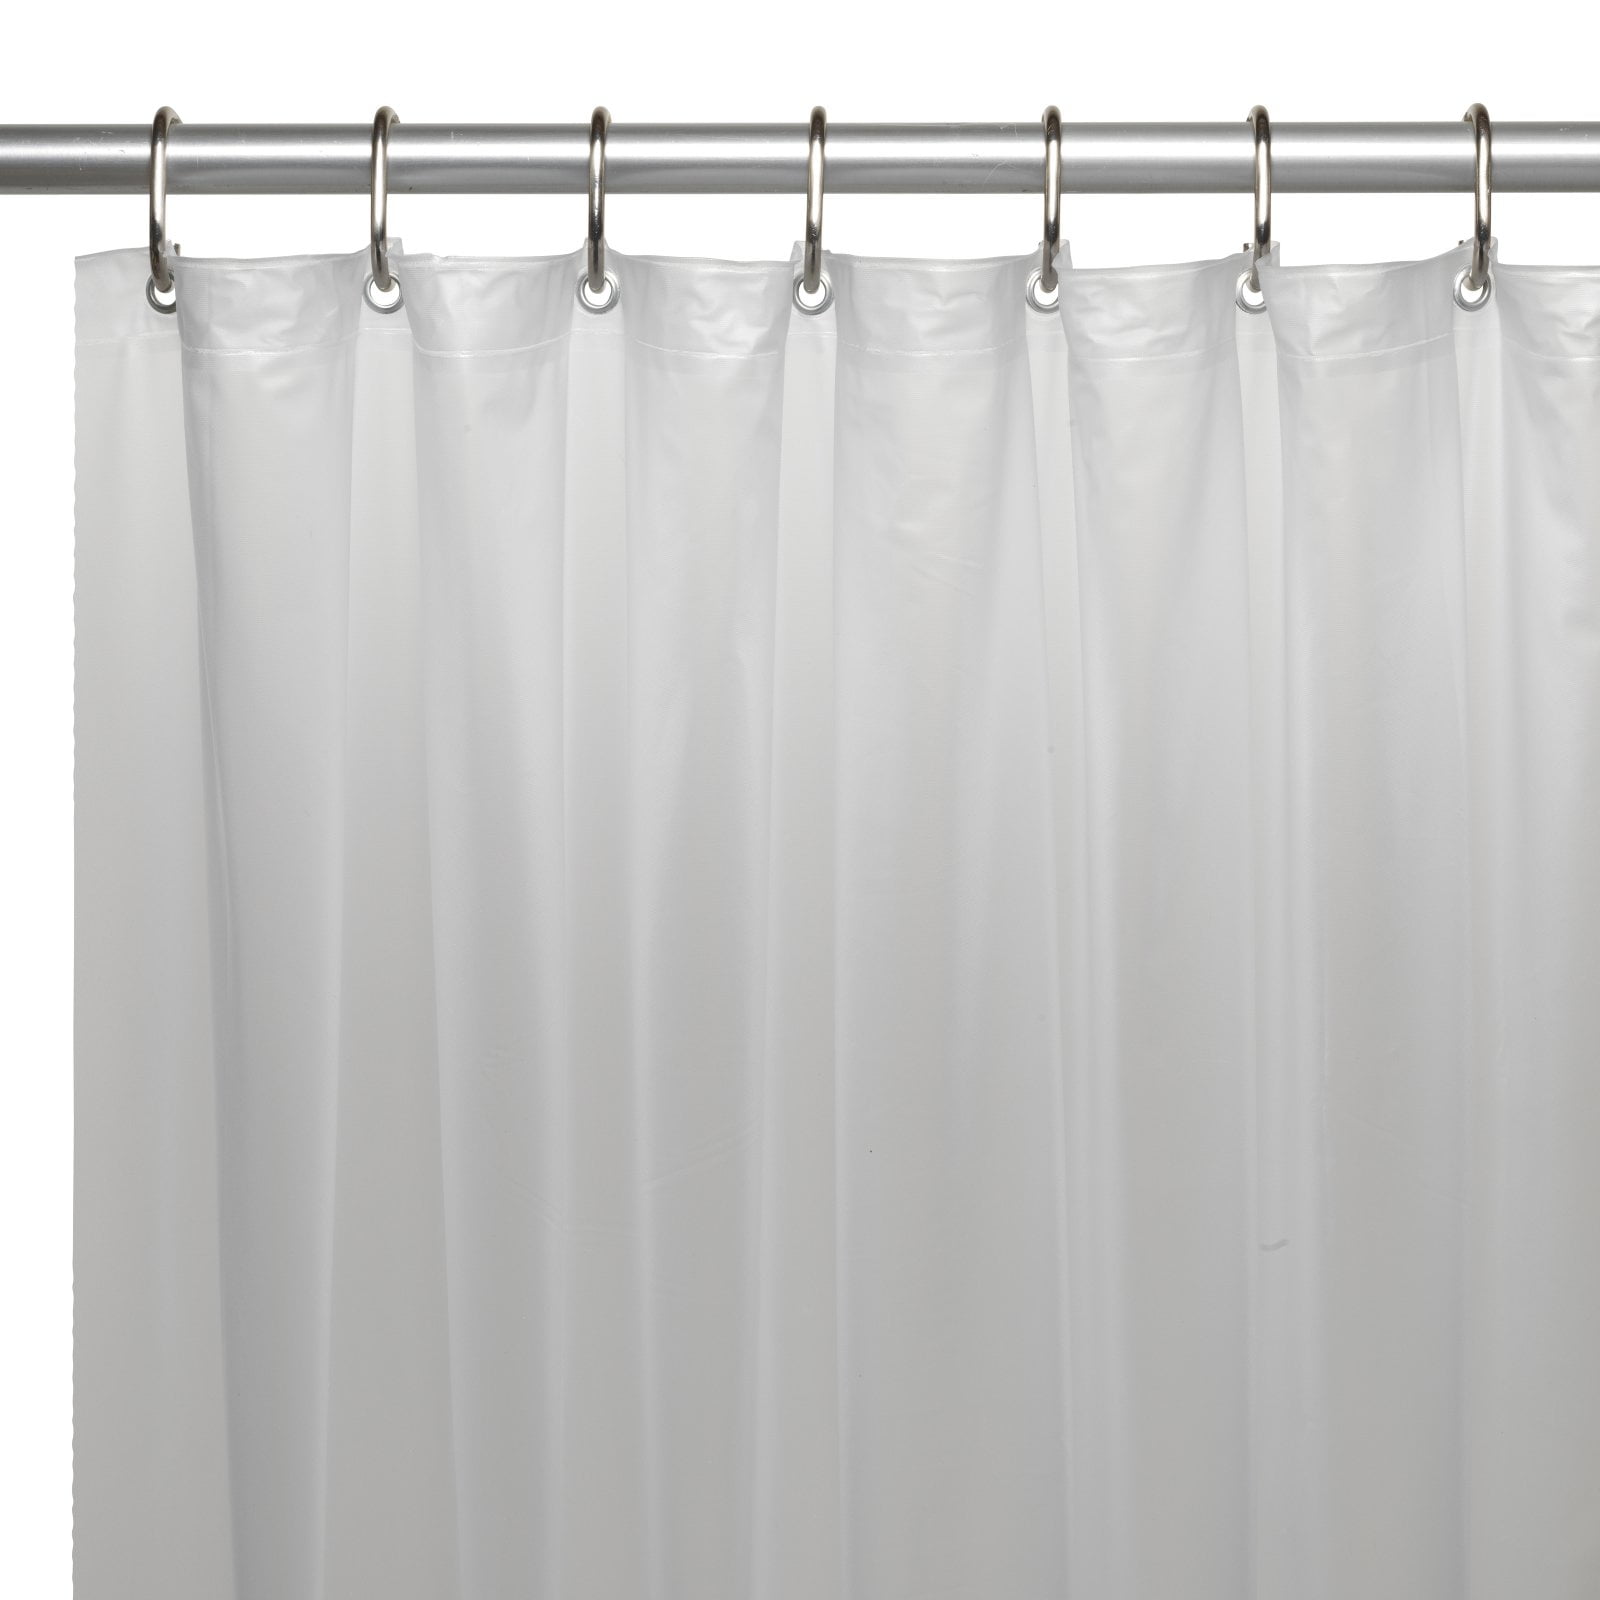 Maytex No More Mildew Shower Curtain Liner 